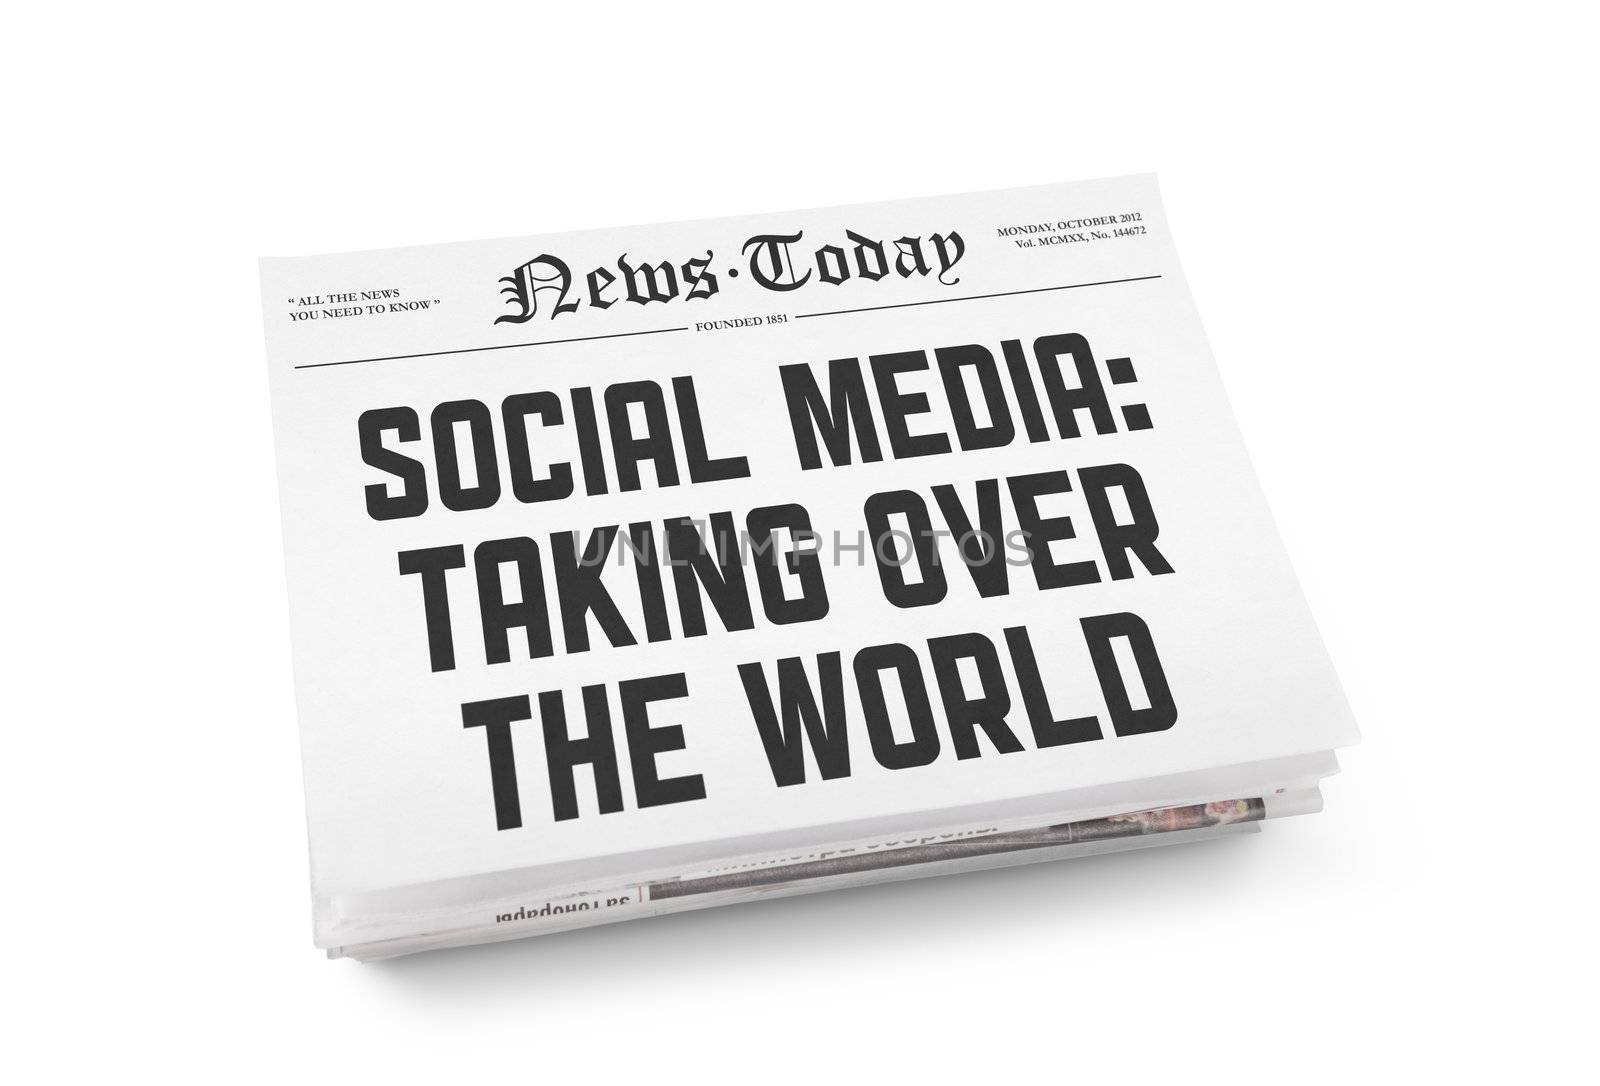 Social media newspaper concept by bloomua